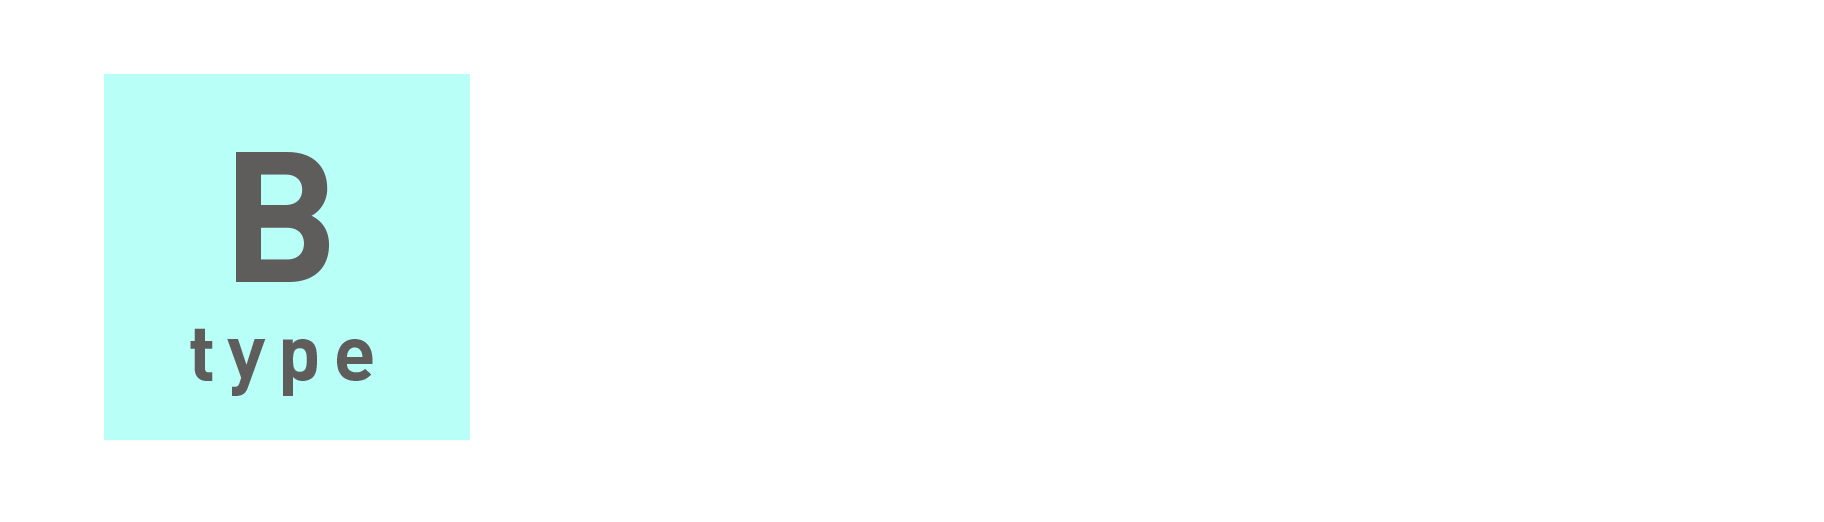 B-type｜3LDK+WIC 専有面積70.18㎡（約21.22坪）